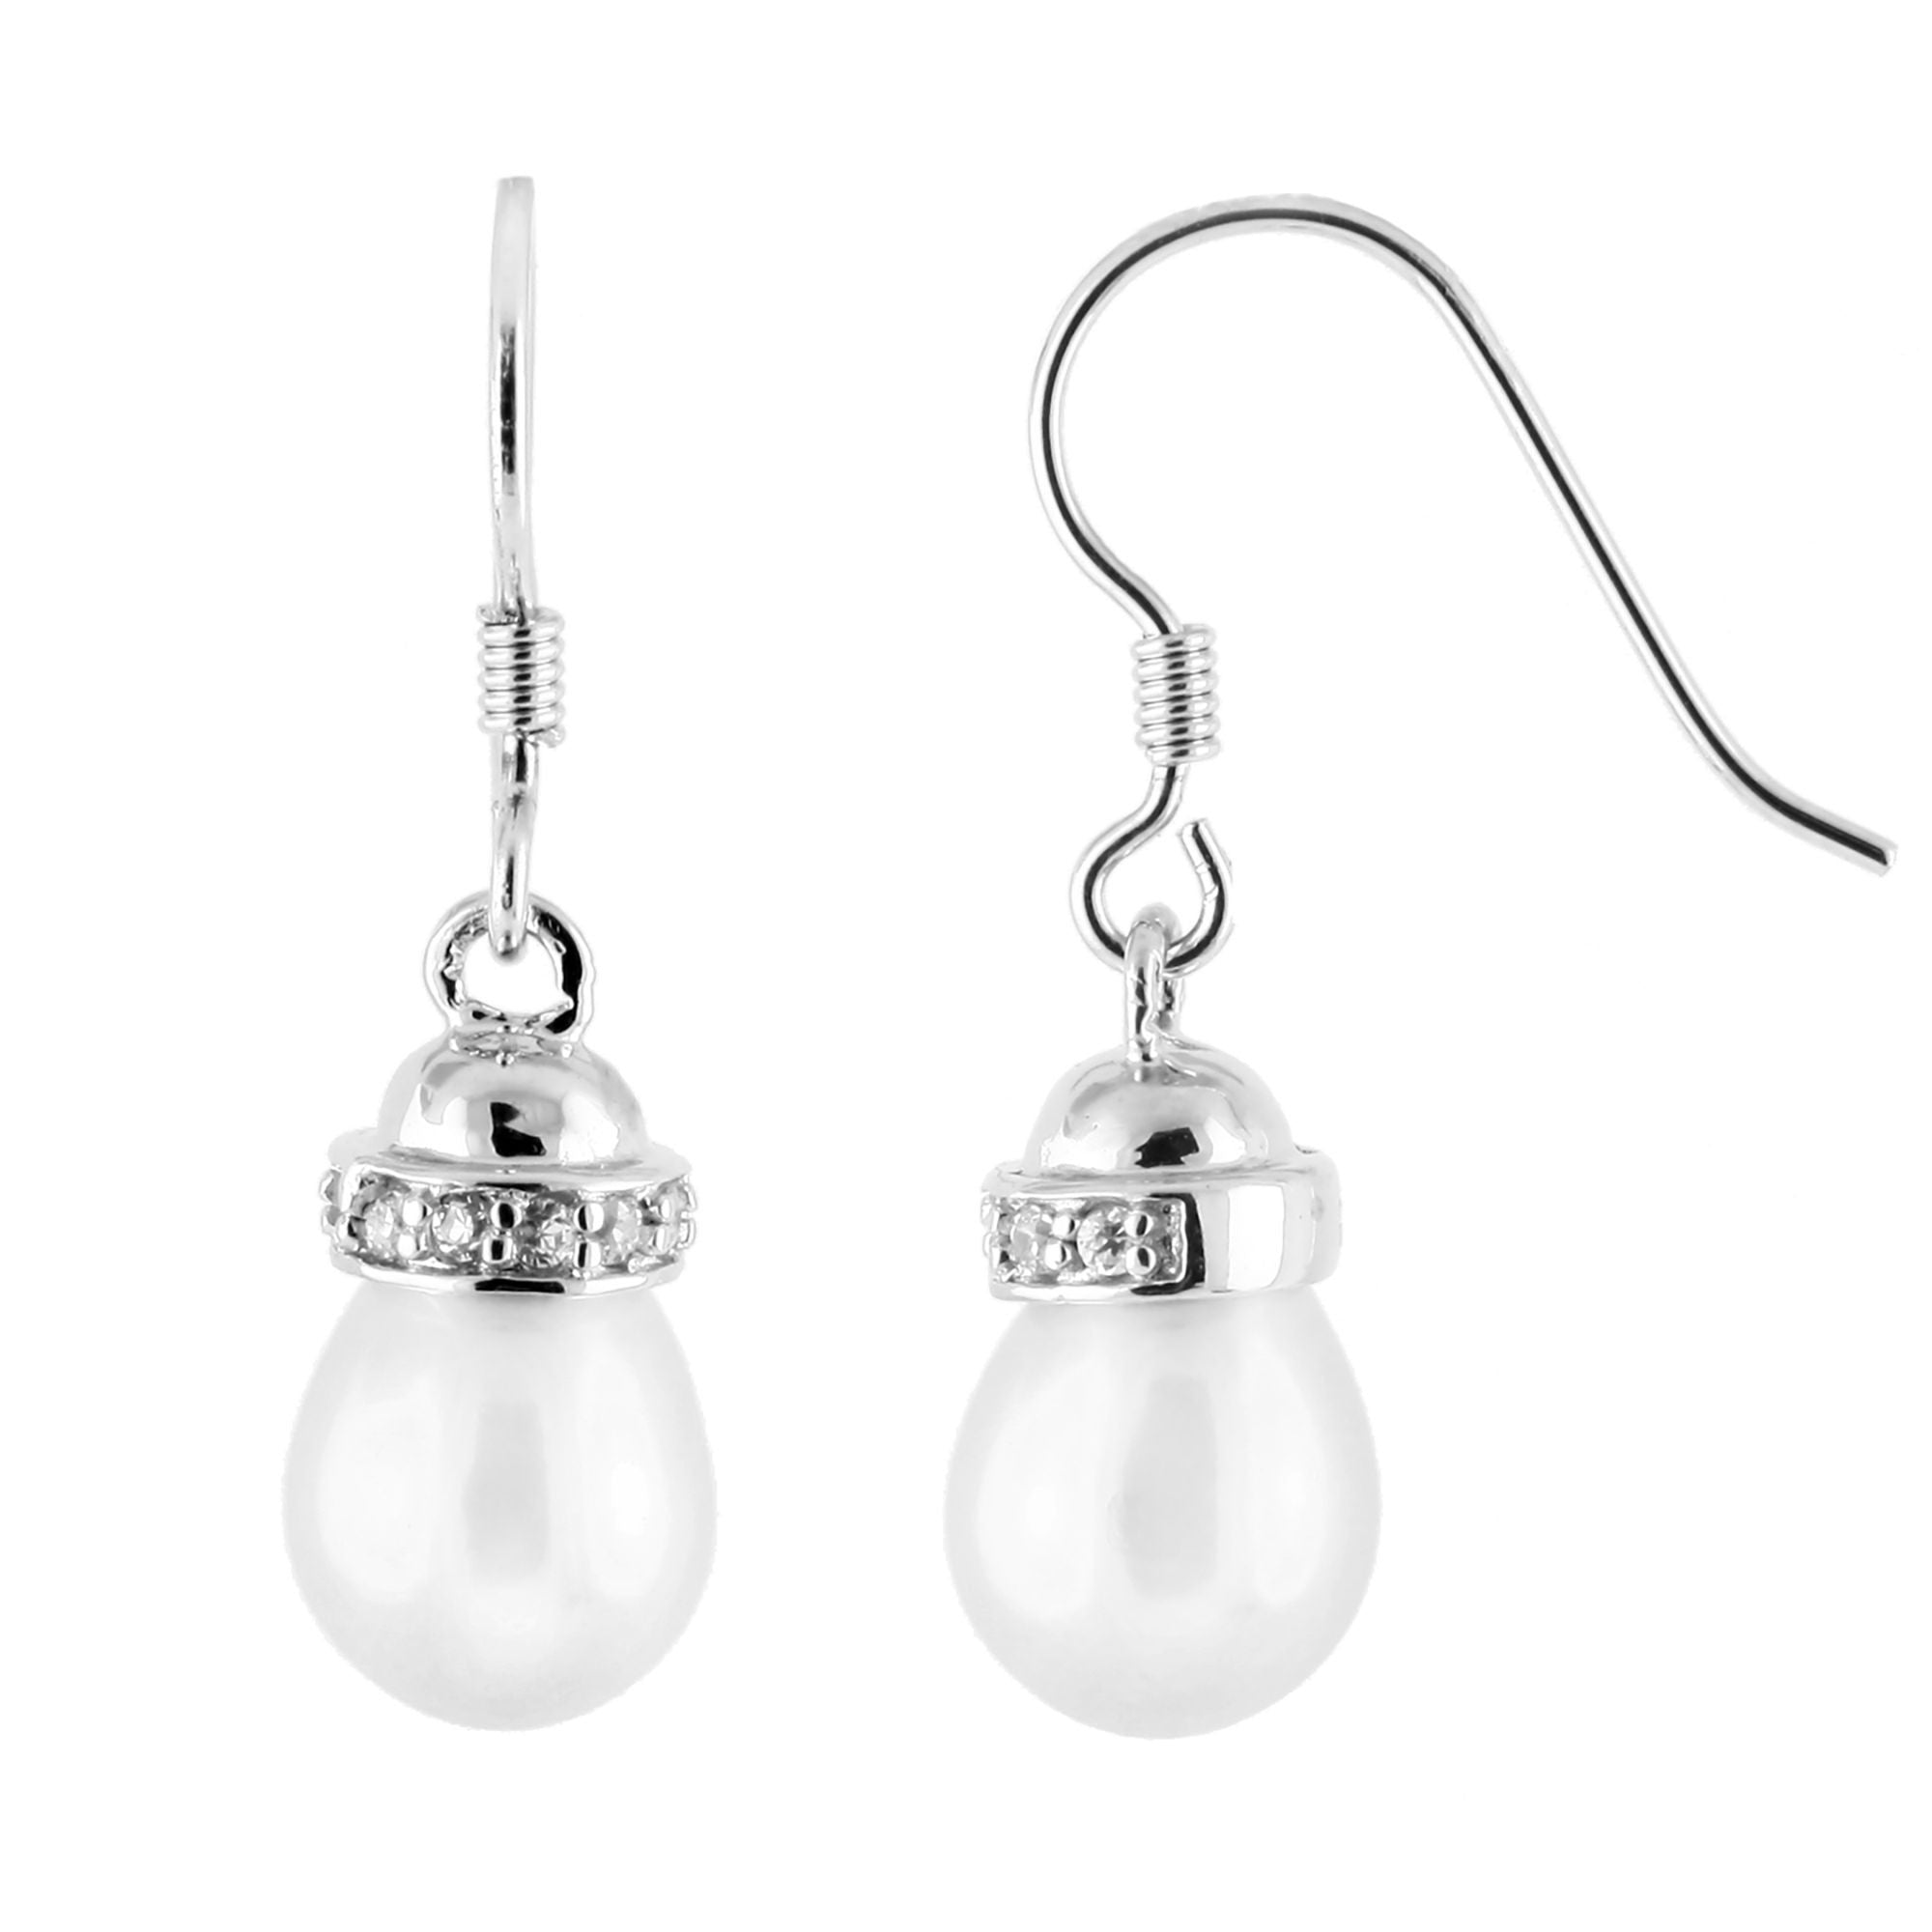 title:Splendid Pearls Sterling Silver Pearl Earrings ESR-409;color:White